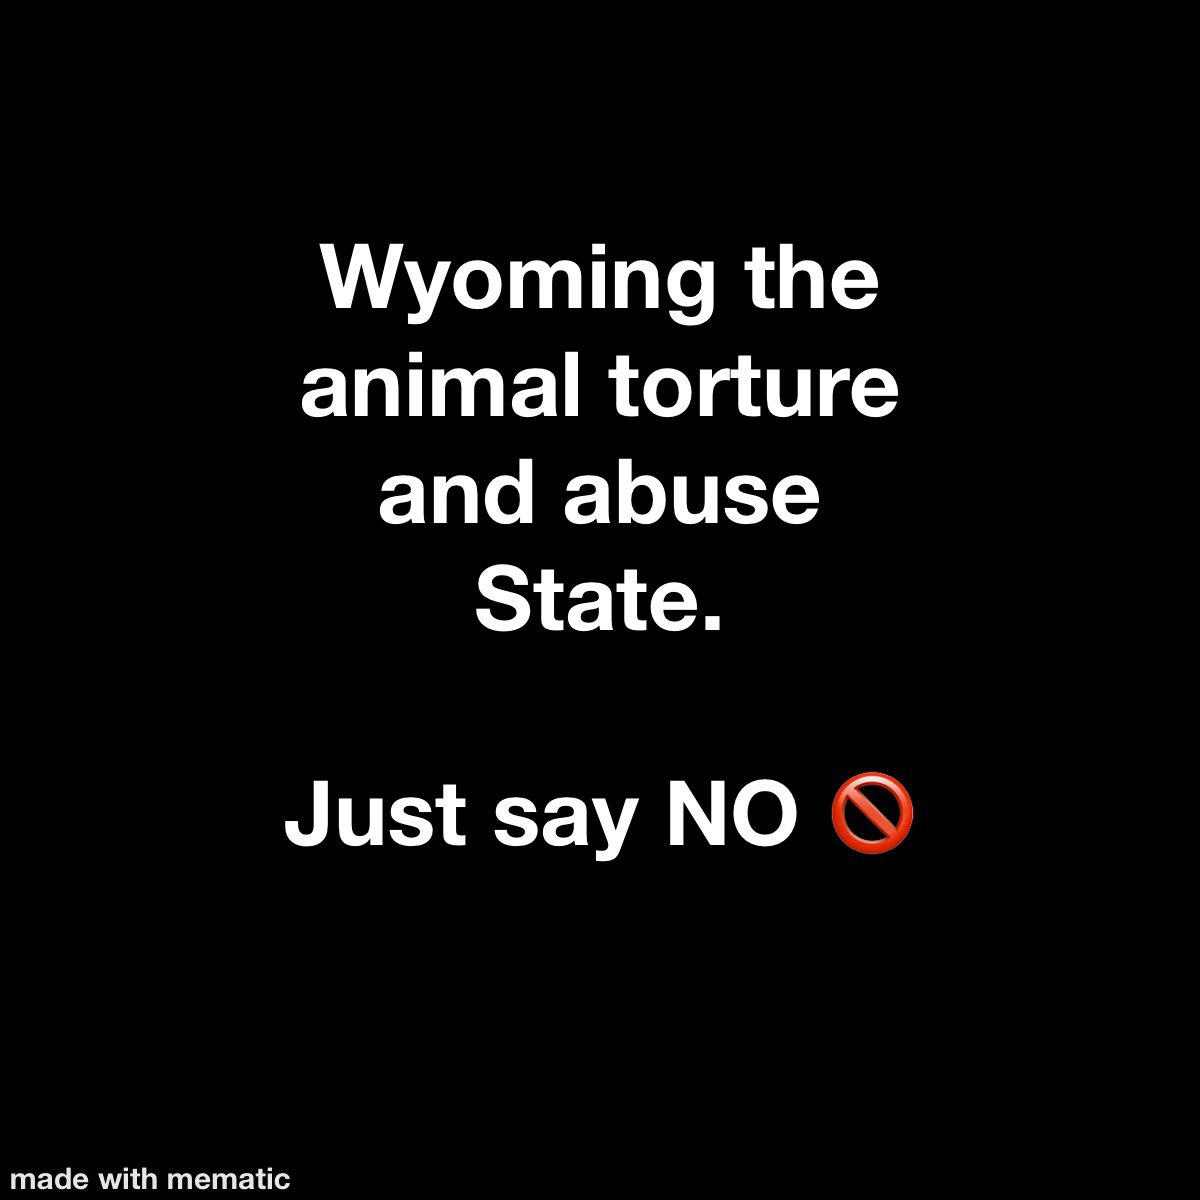 @YellowstoneNPS #BoycottWyoming
#CodyRoberts